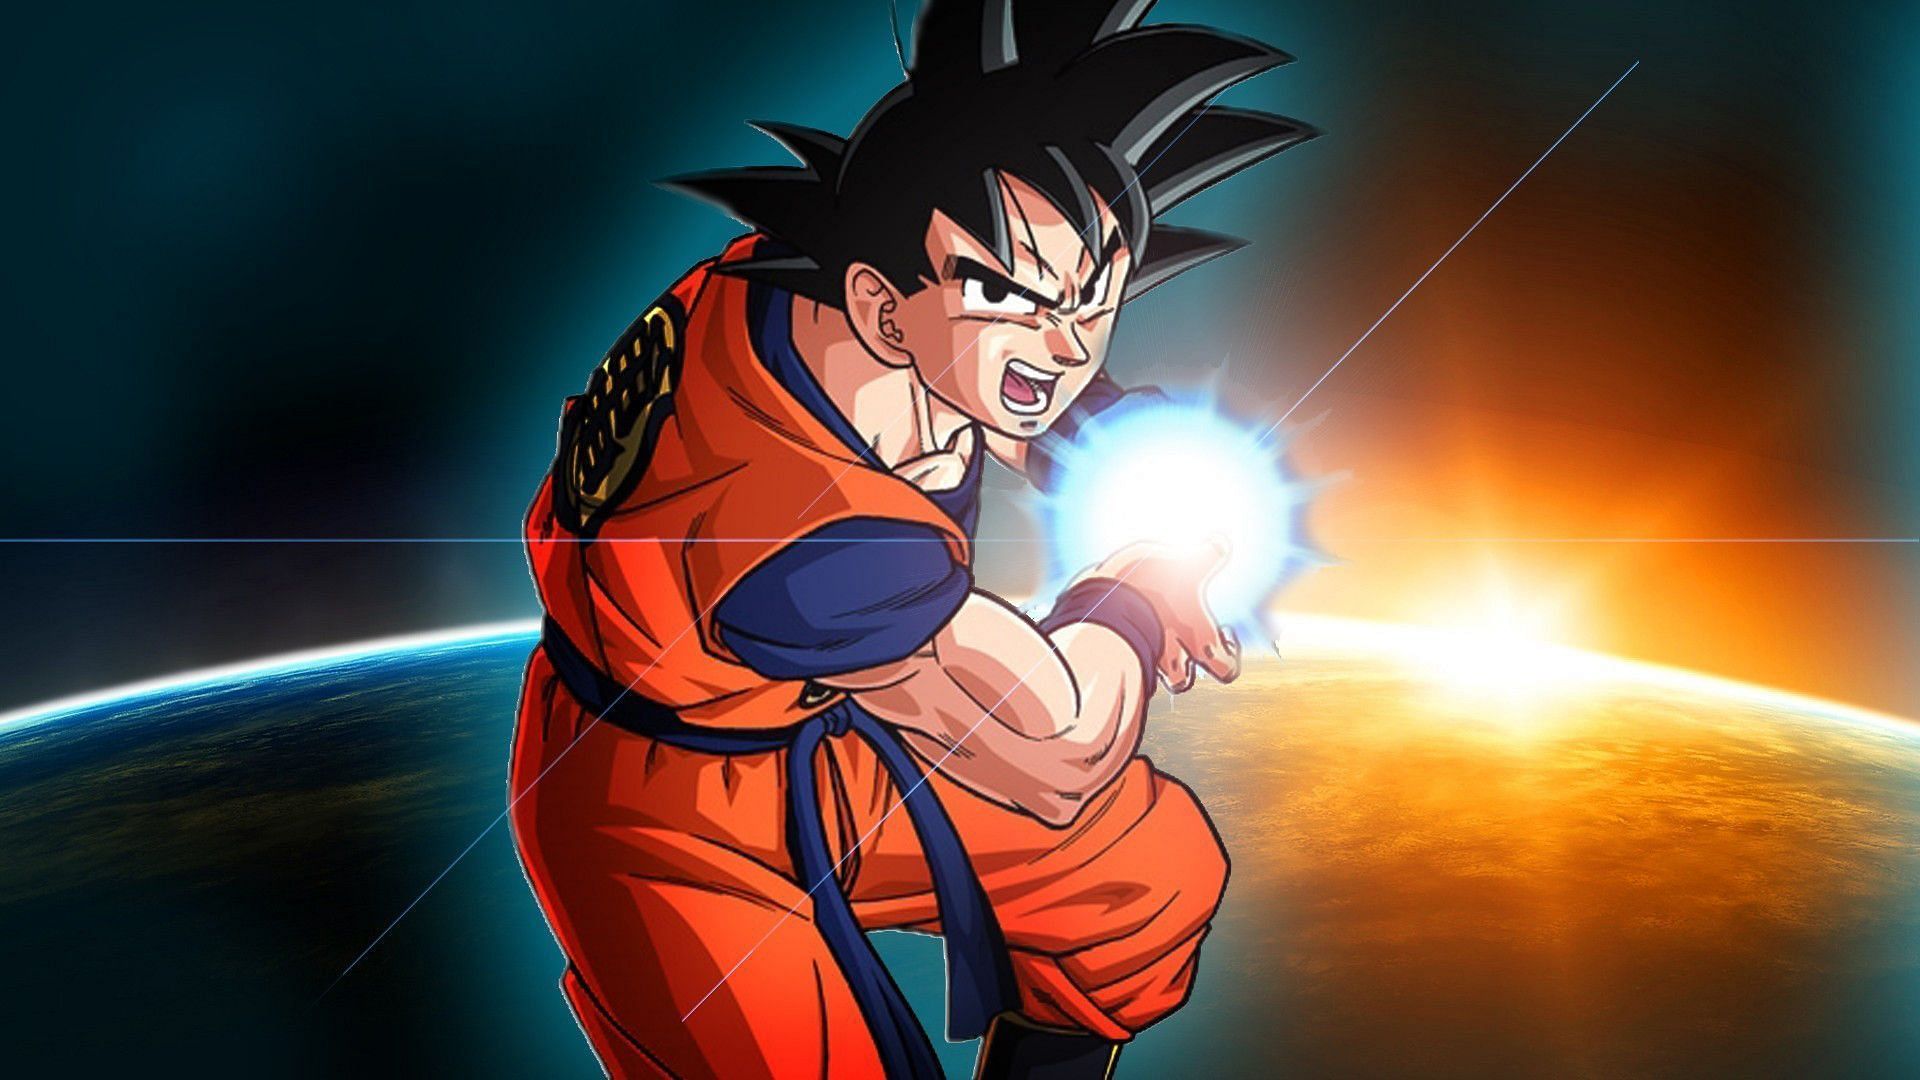 Goko (Super) - Super Saiyan Goku, Anime Adventures Wiki